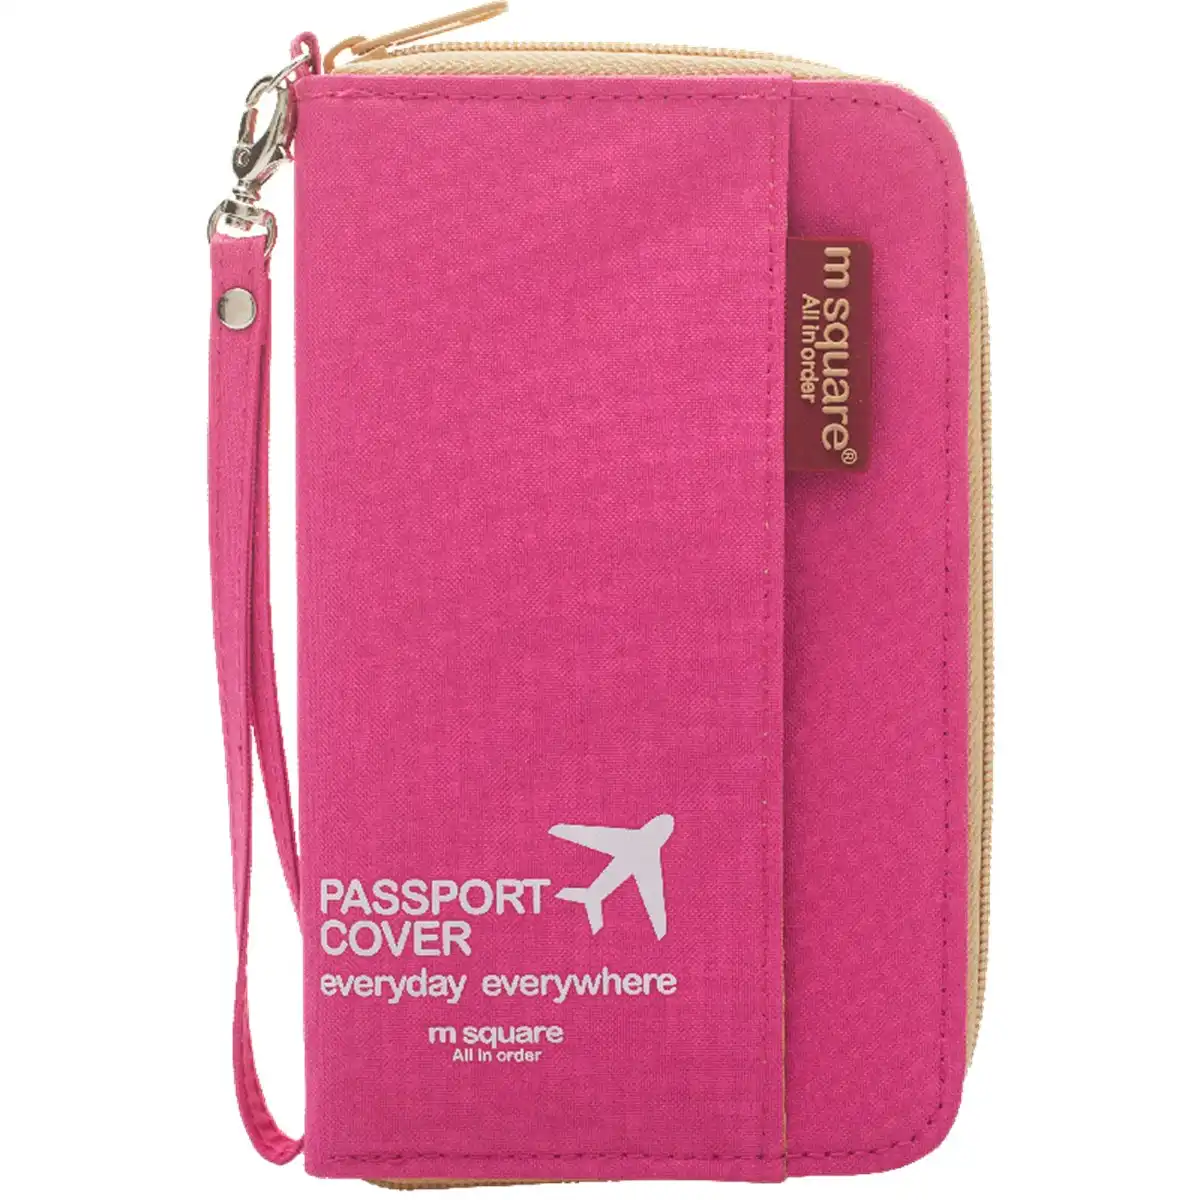 M Square multinational colorful traveling passport wallet bag short version Pink